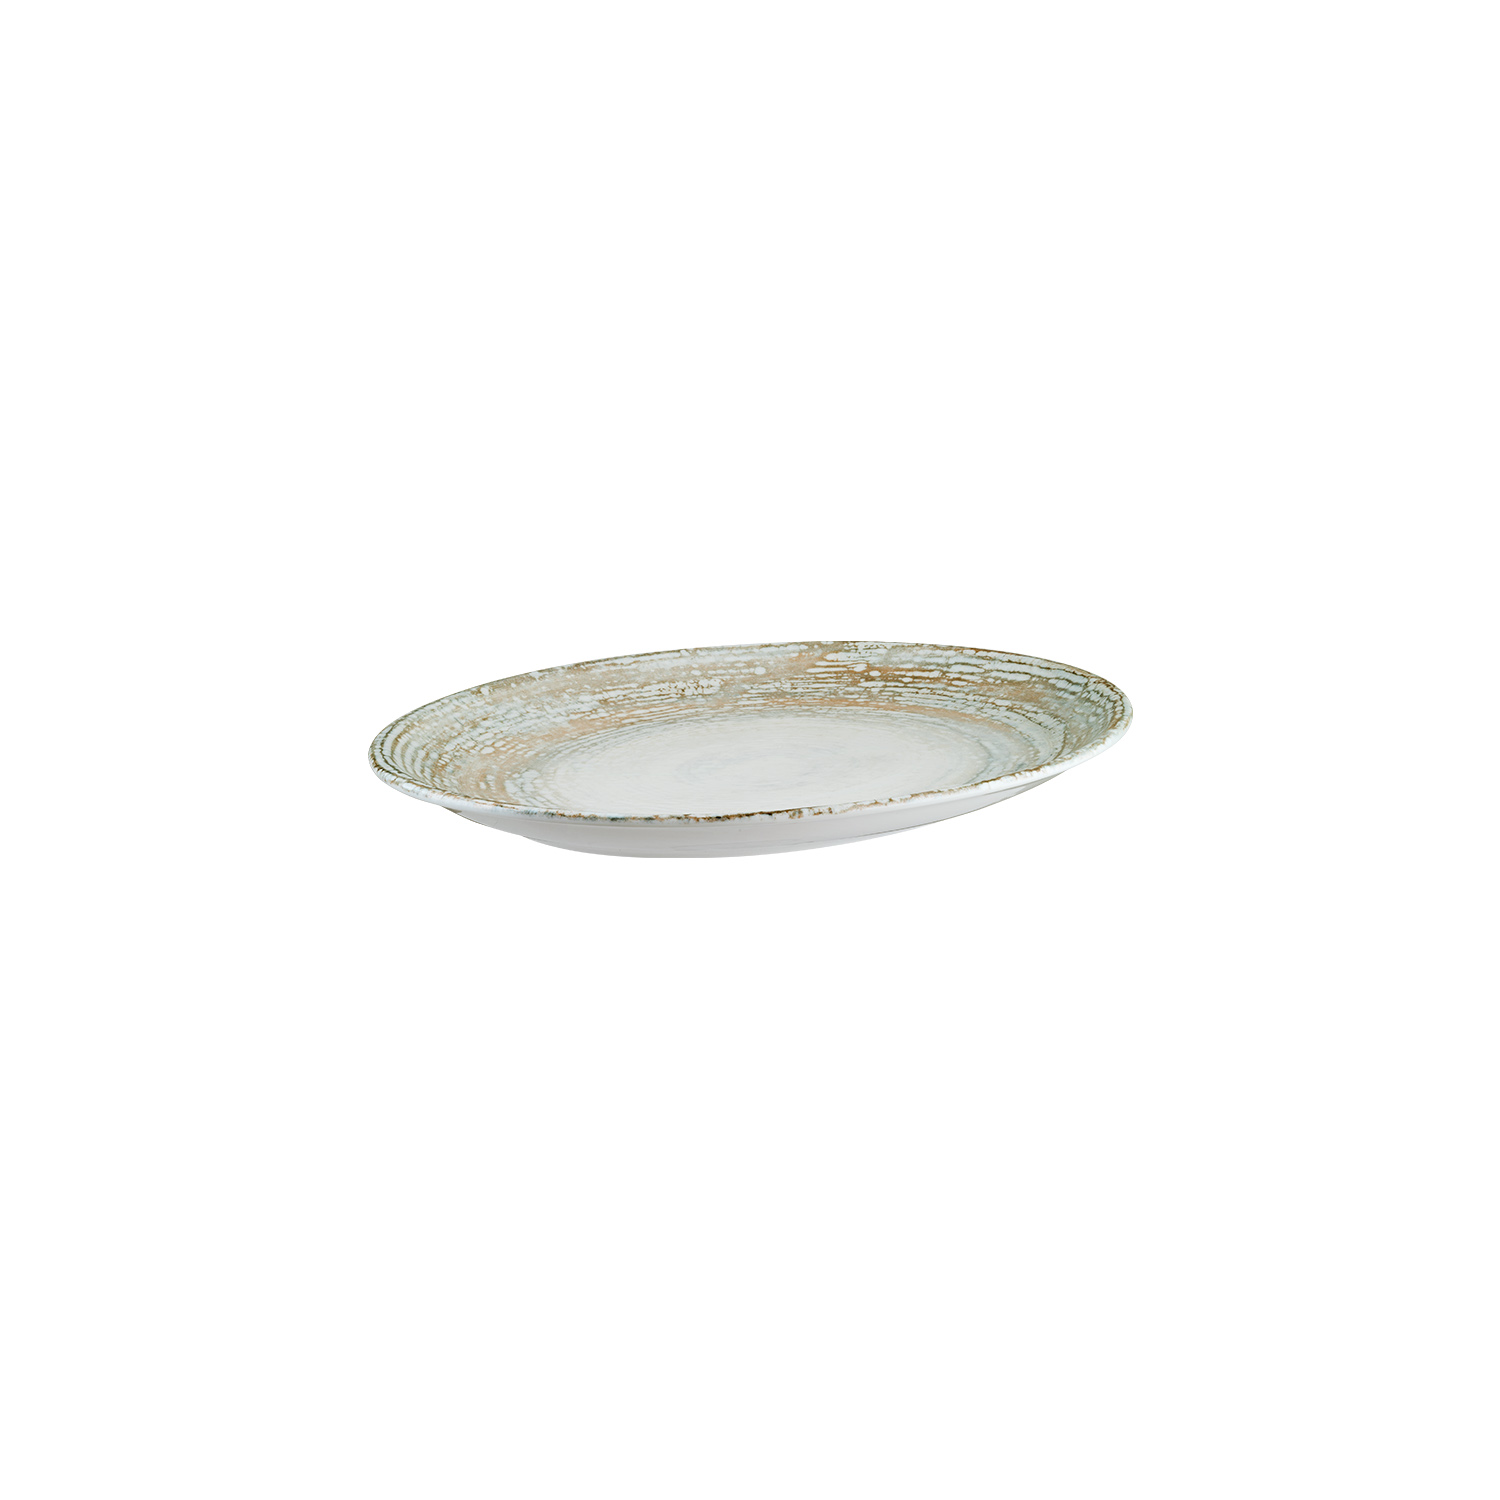 Patera Porcelain Platter Oval